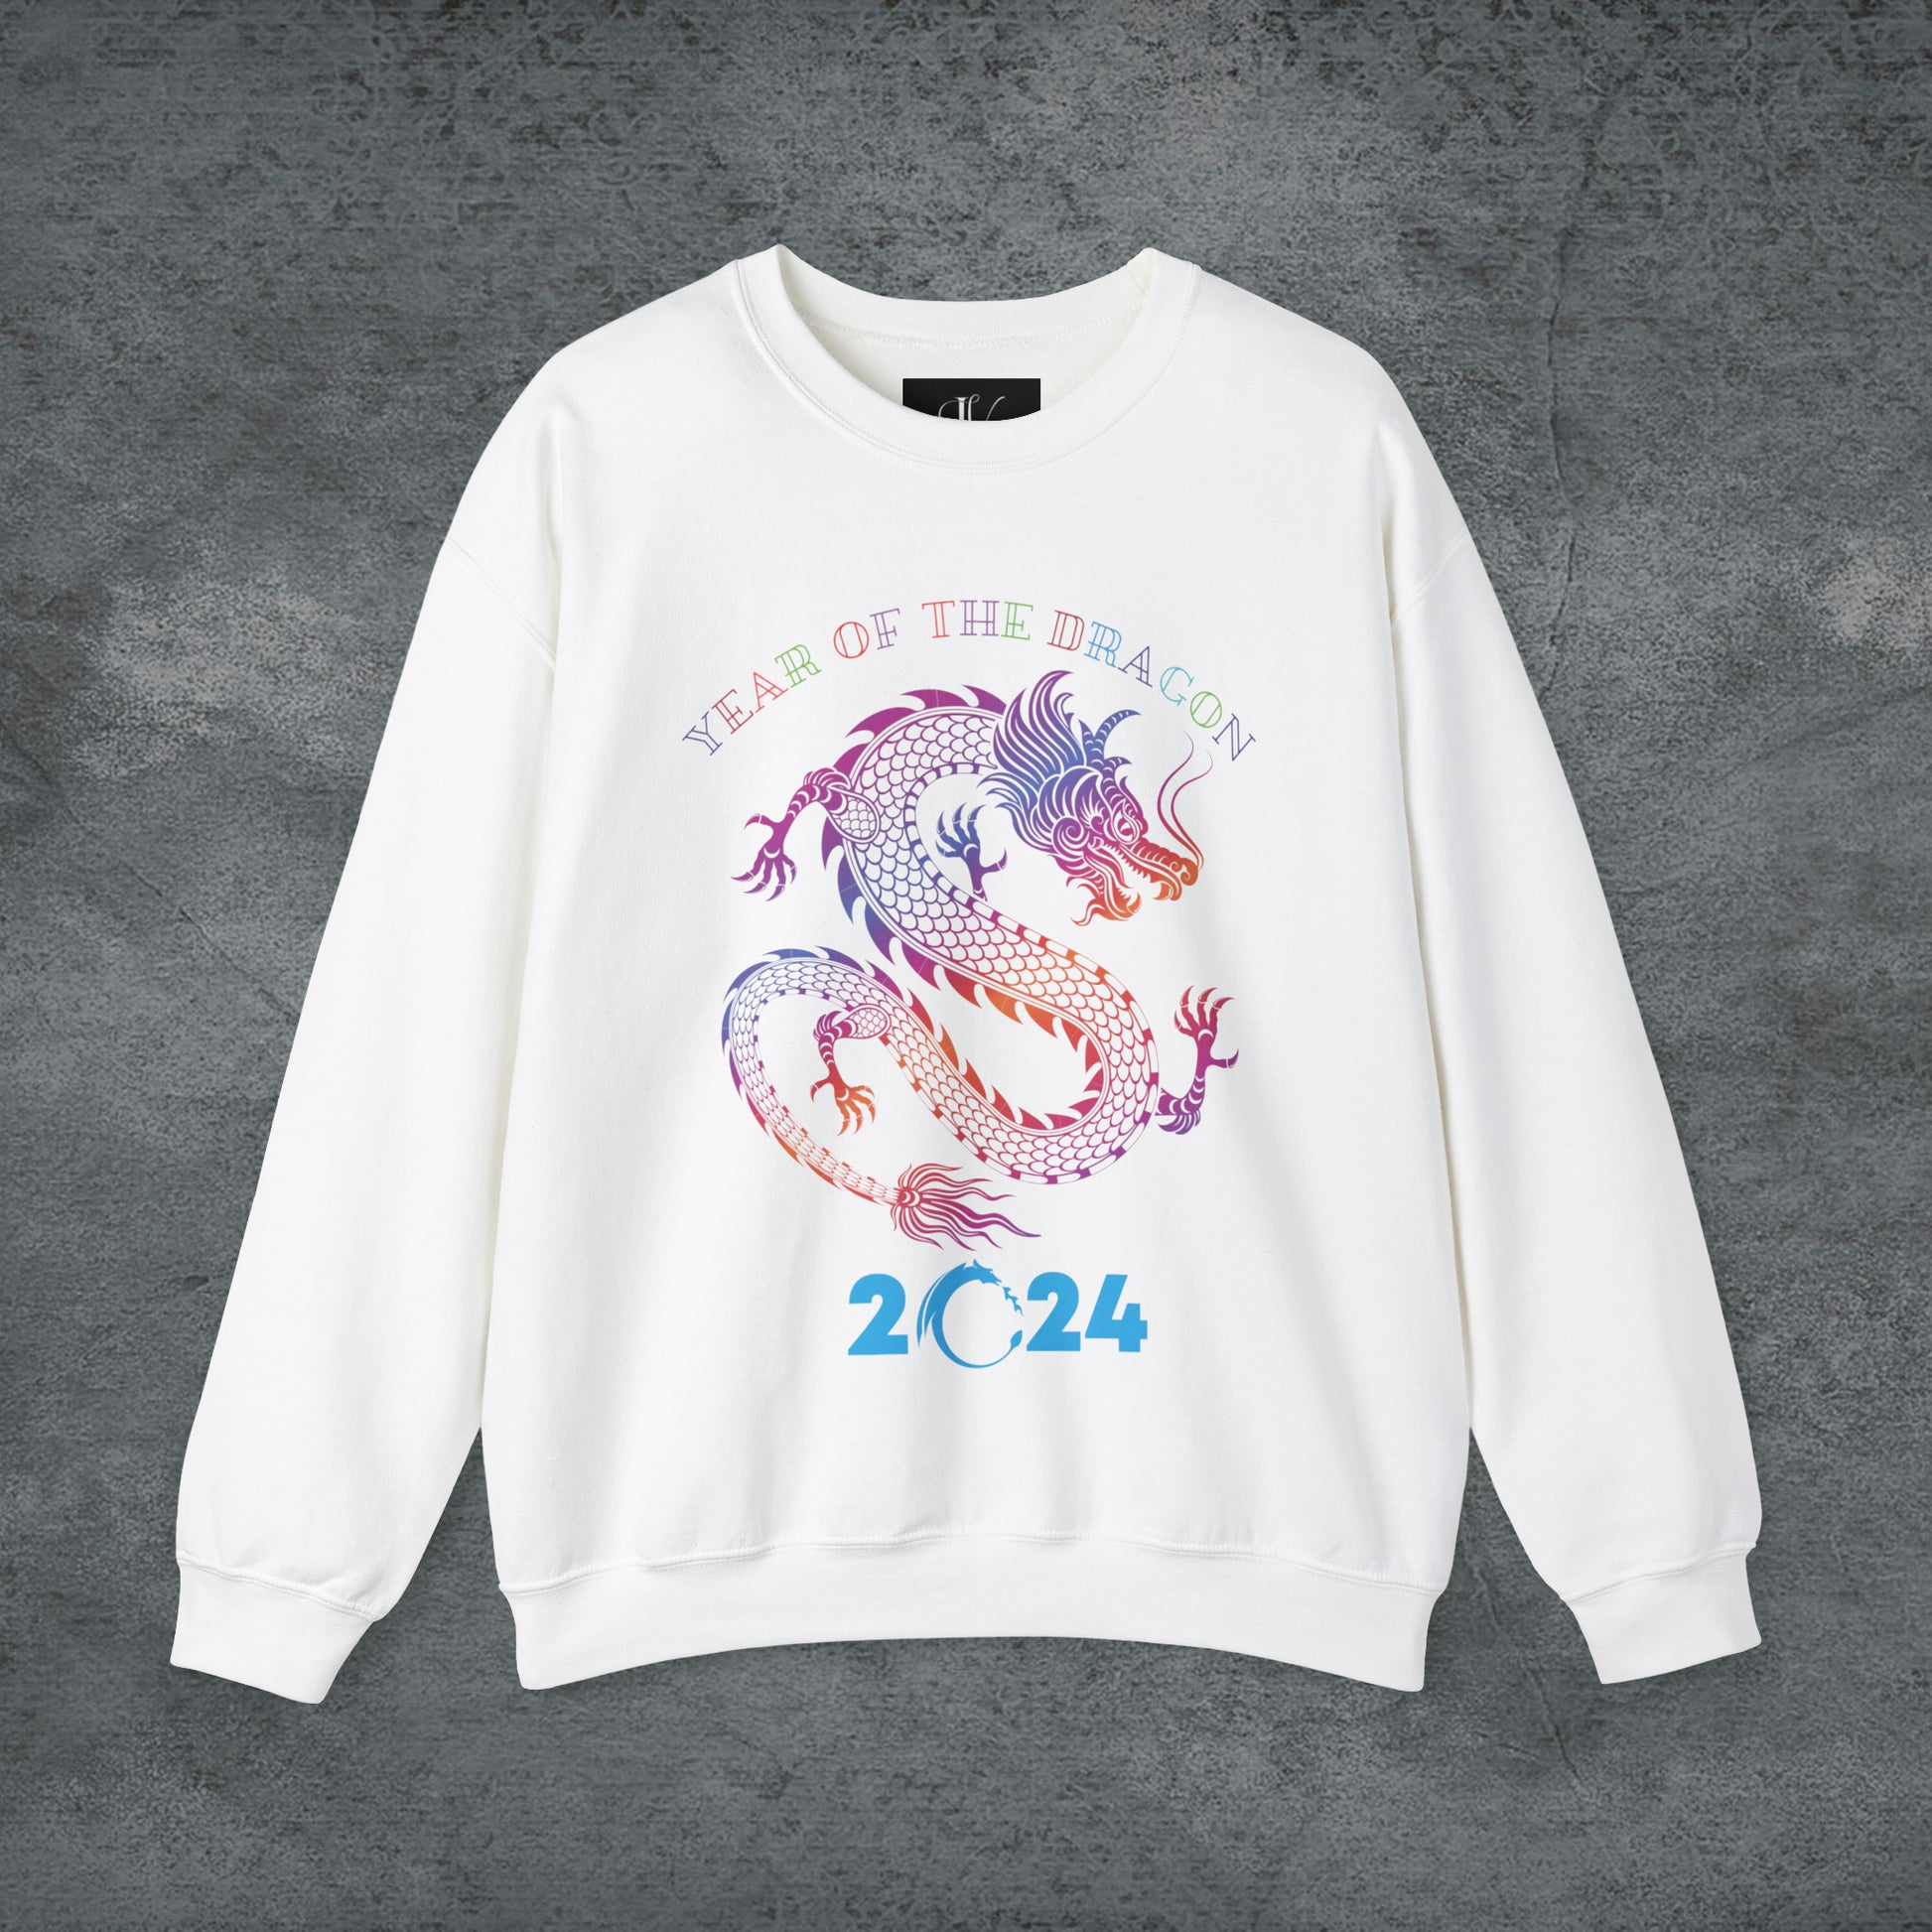 Year of the Dragon Sweatshirt - 2024 Chinese Zodiac Shirt for Lunar New Year Celebrations Sweatshirt S White 